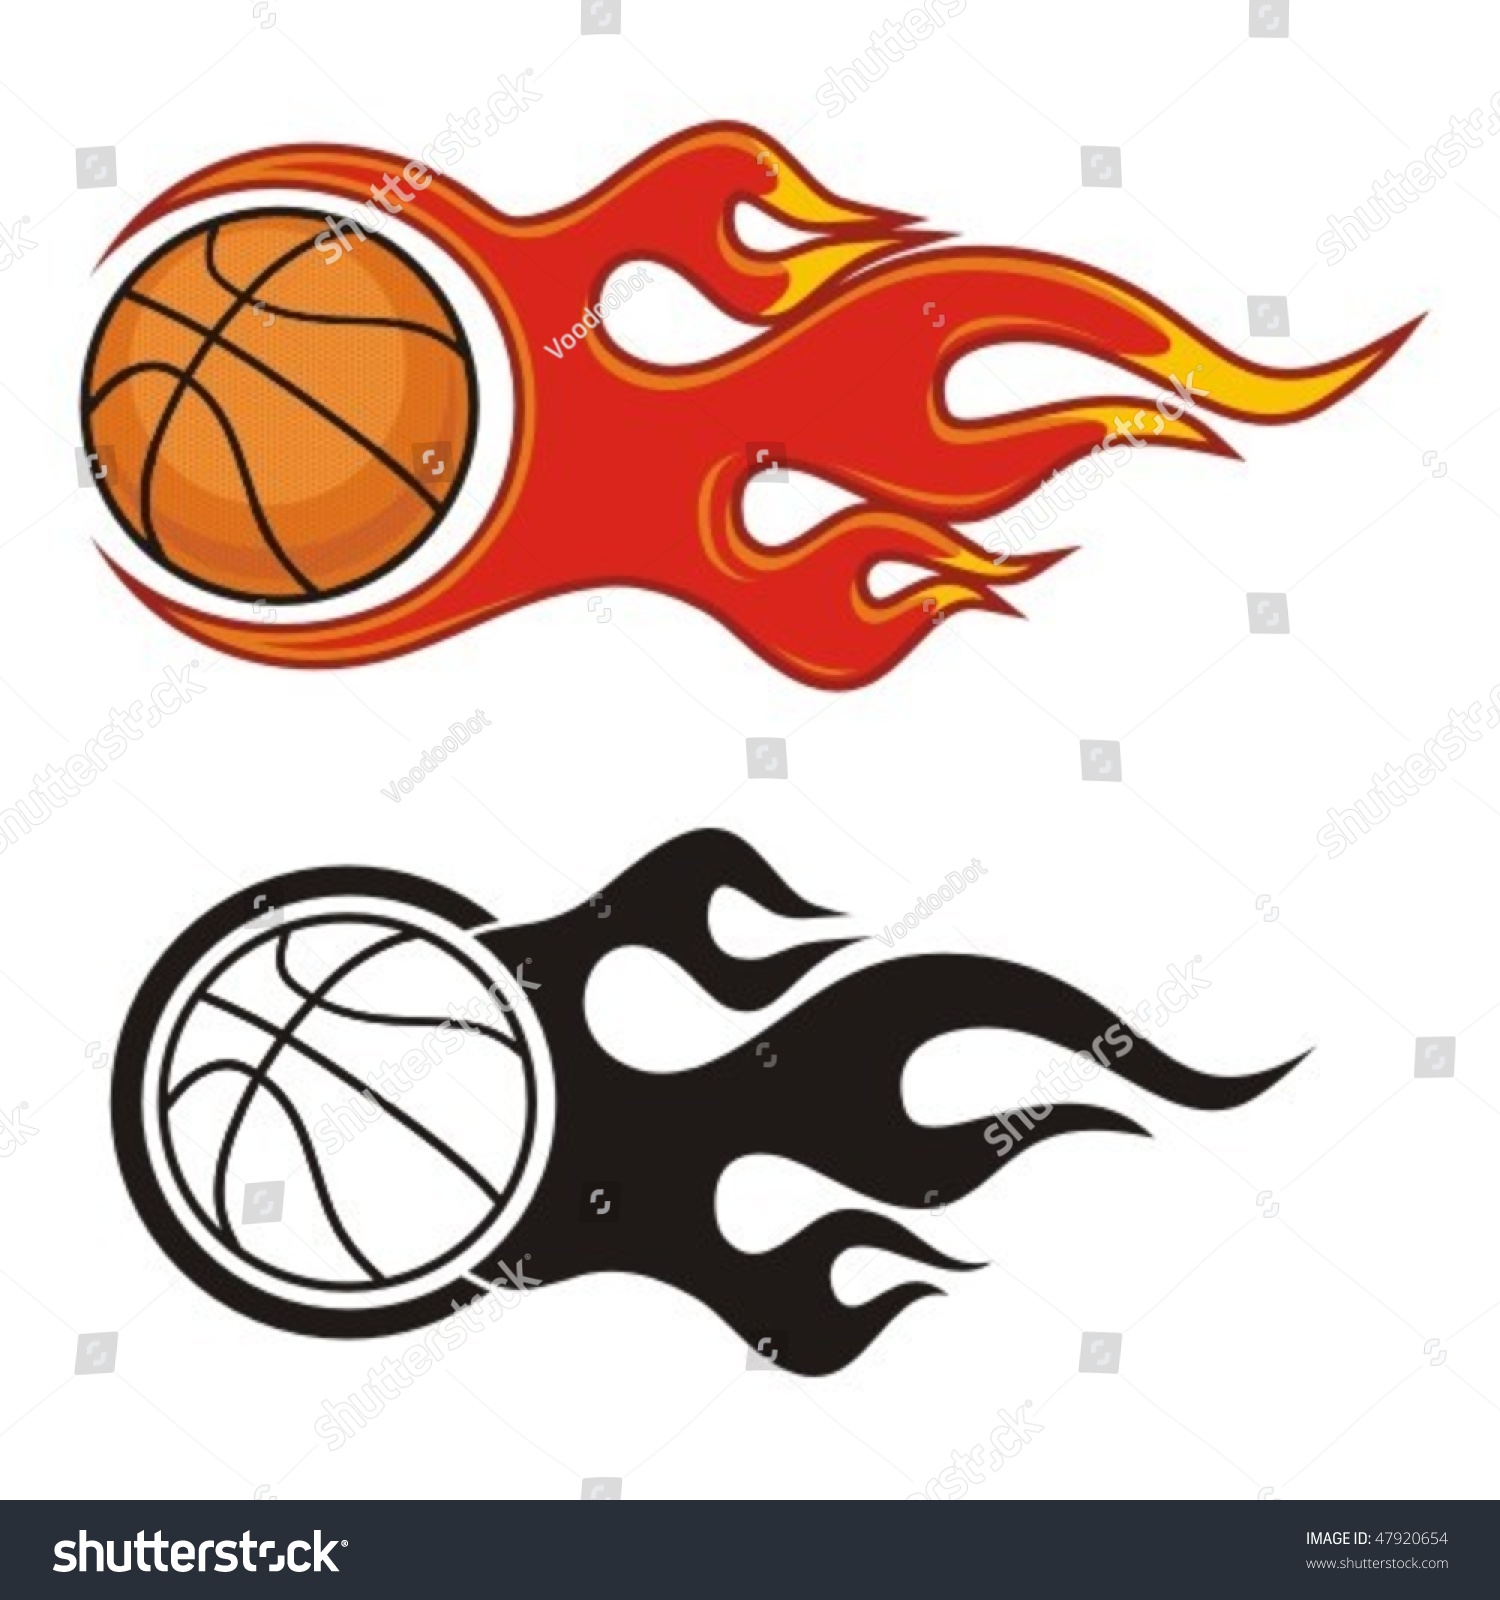 Flaming Basketball Ball Vector Illustration Stock Vector Royalty Free Shutterstock